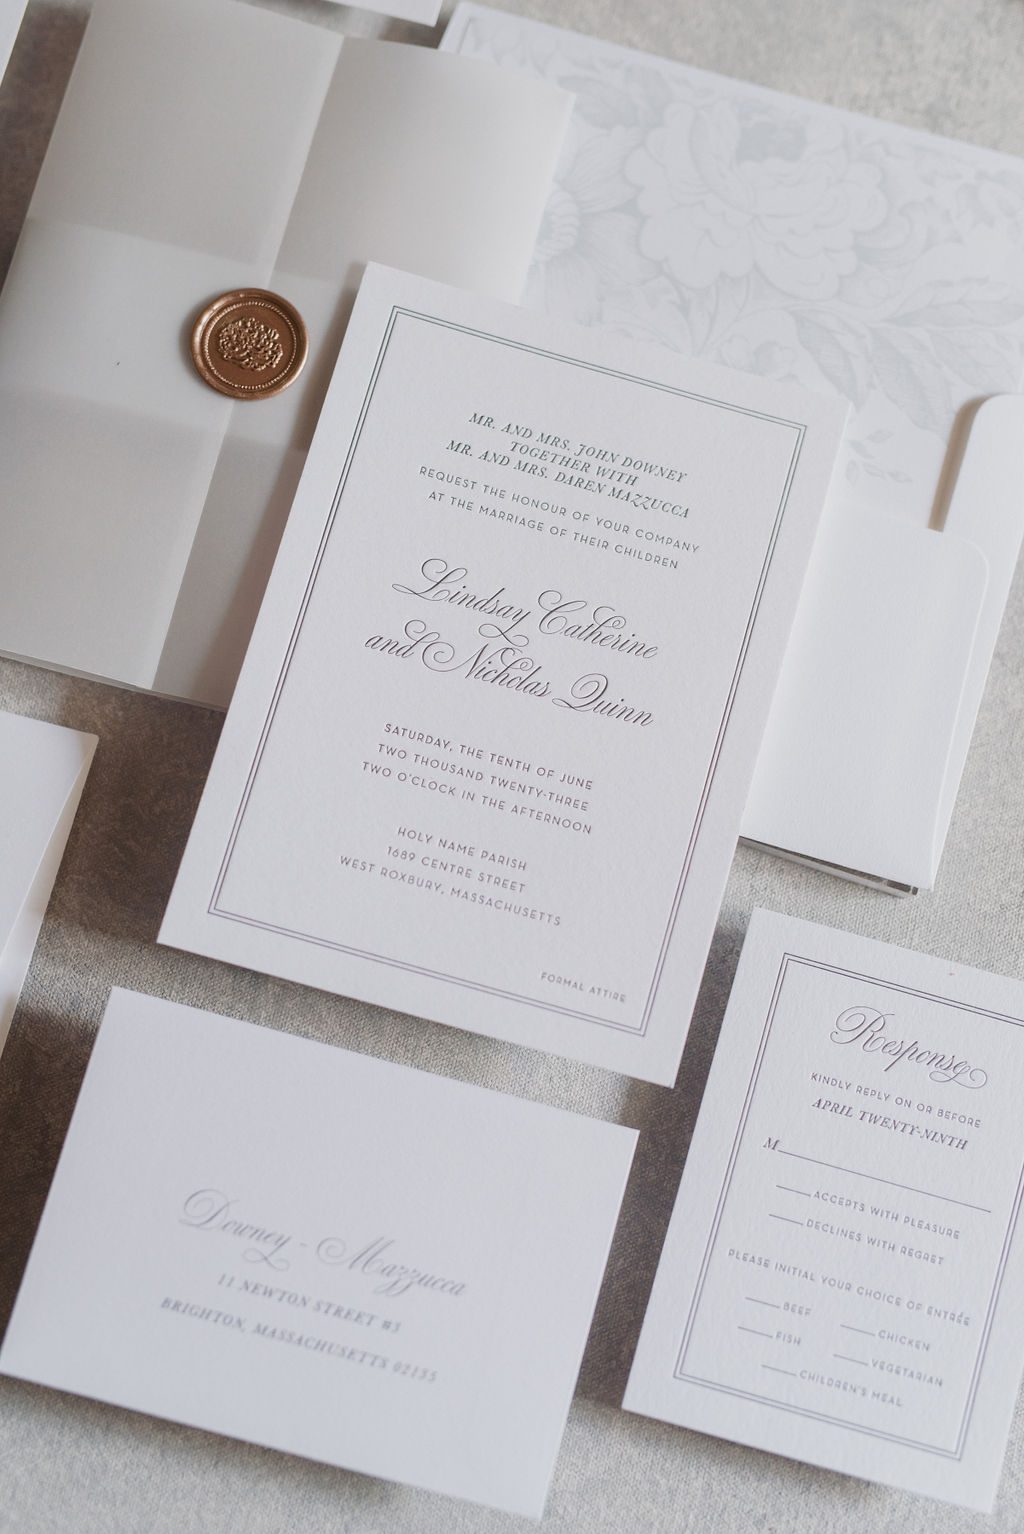 omni parker house wedding invitation suite letter press